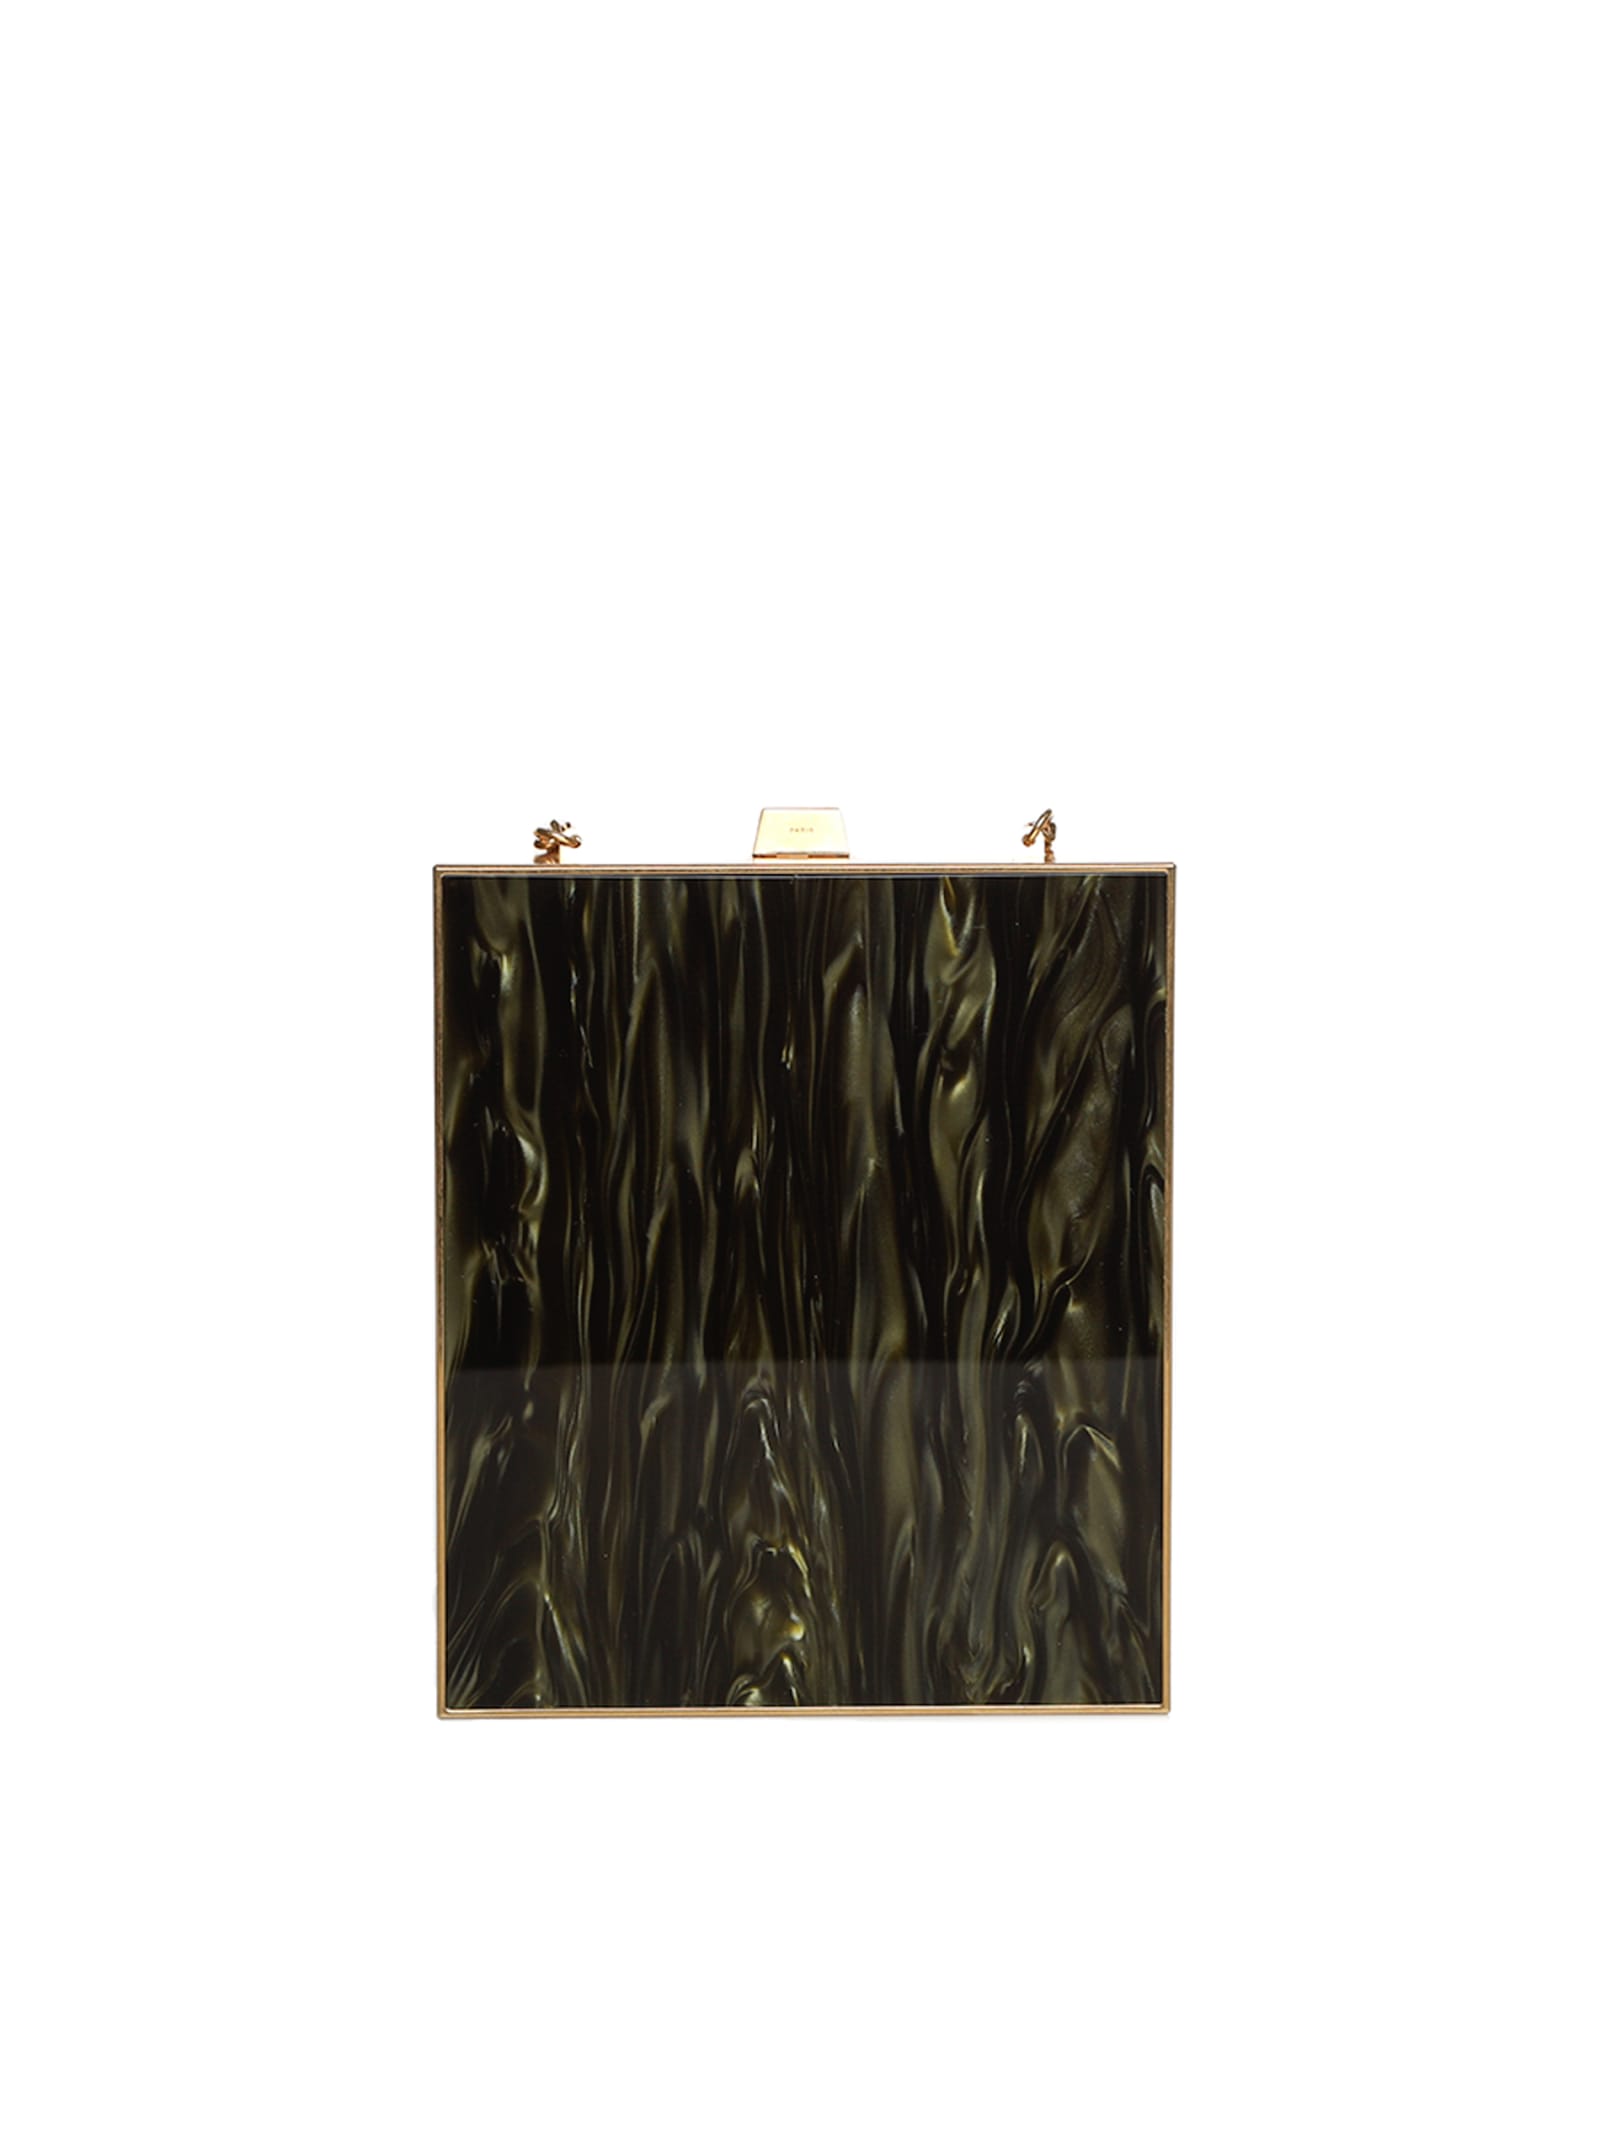 Saint Laurent Box Bag In Plexiglass And Metal In Green/gold | ModeSens